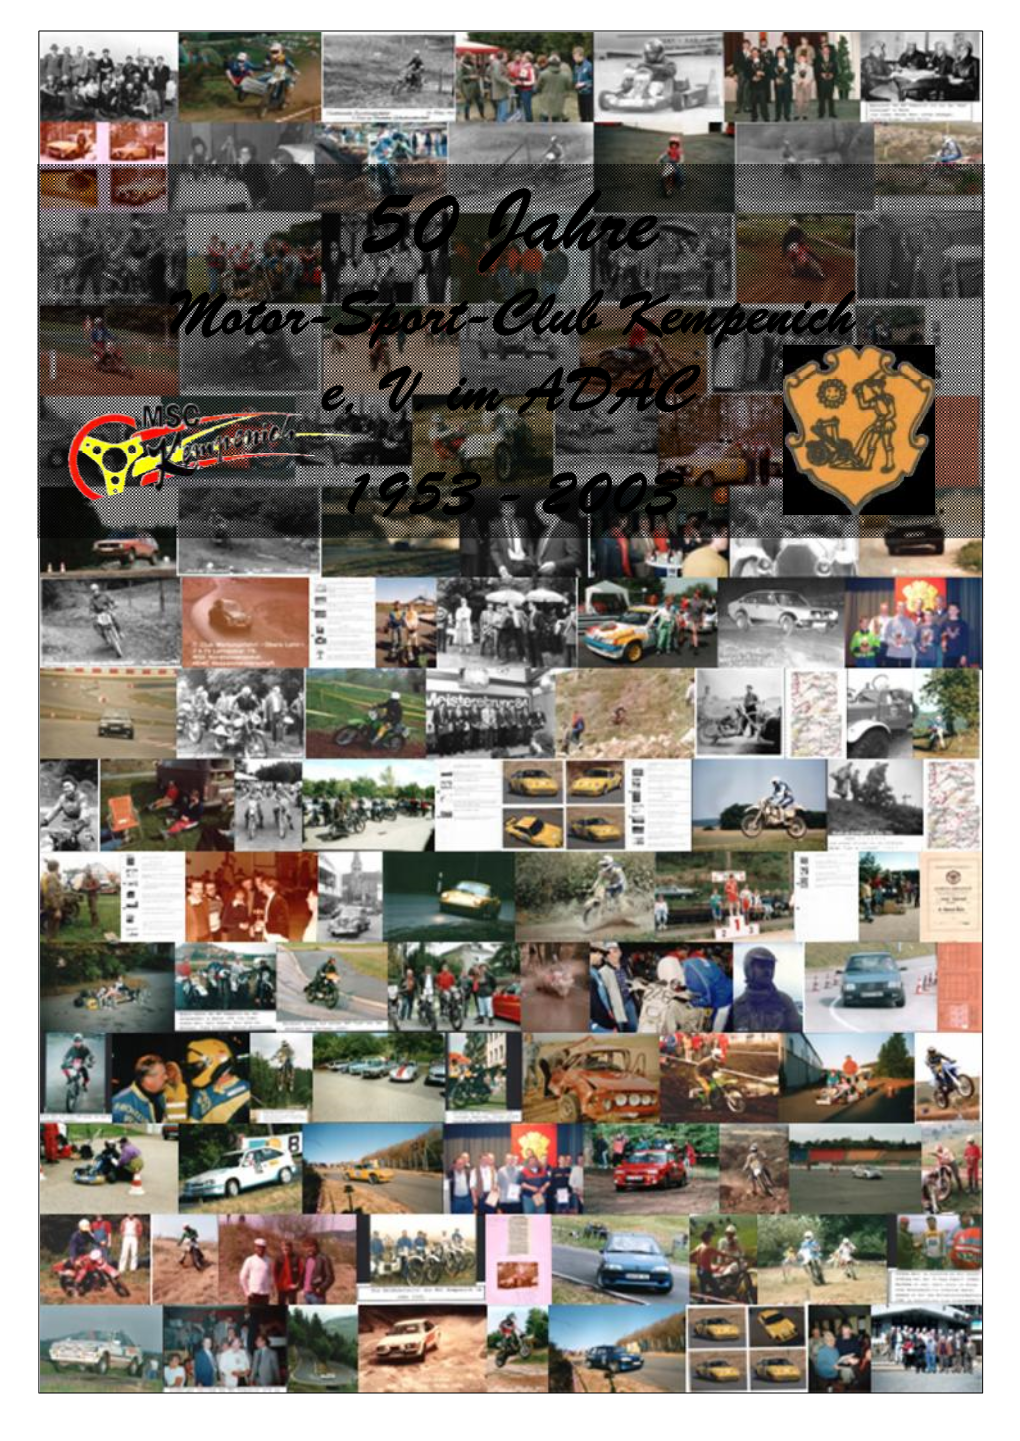 50 Jahre Motor-Sport-Club Kempenich E, V